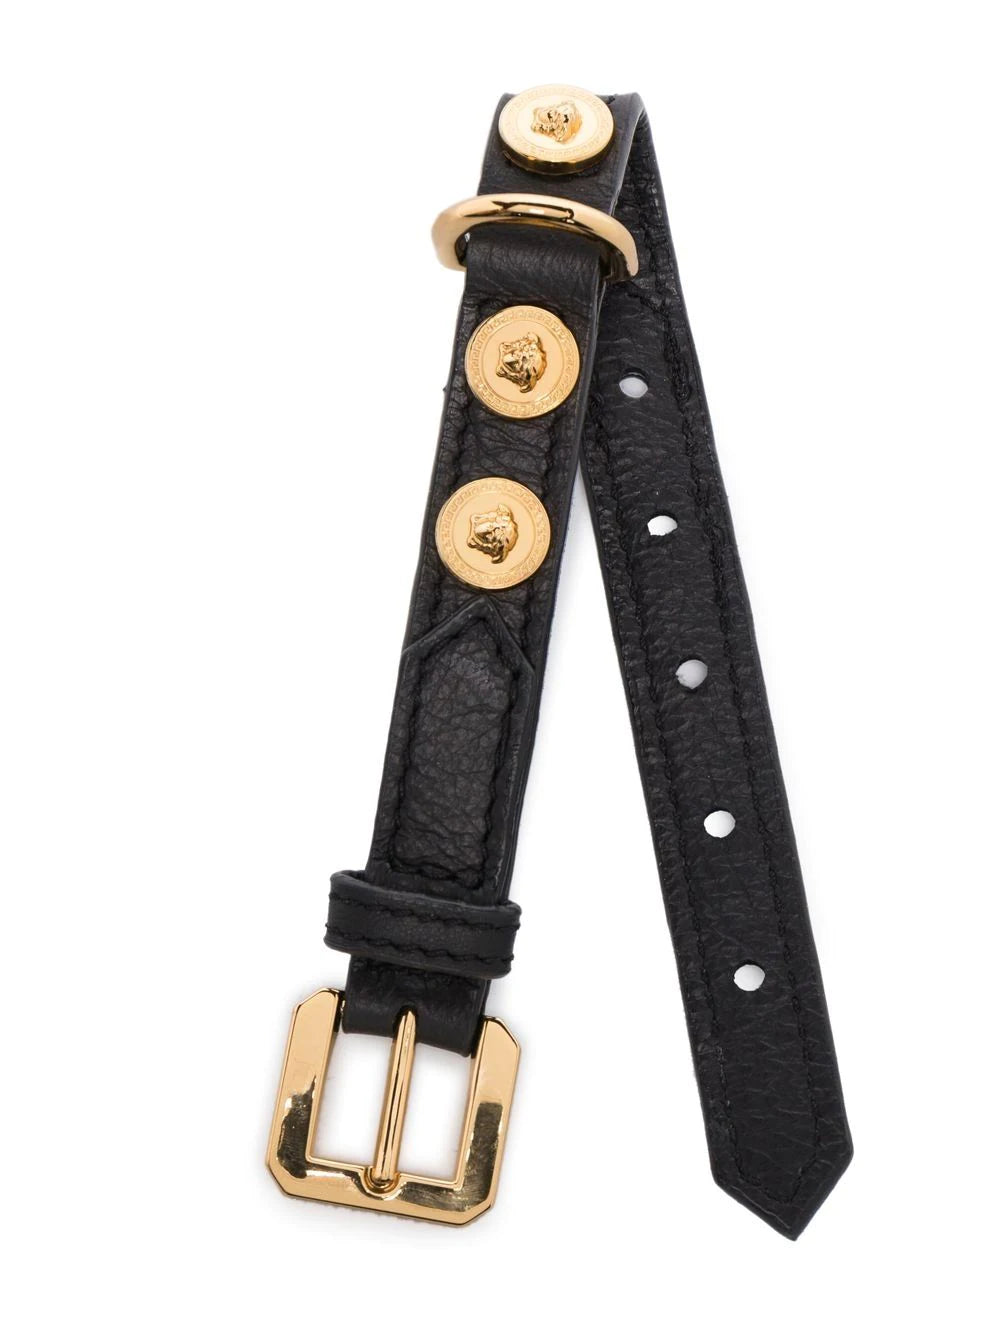 Leather dog collar by Versace #dogcollar #versace